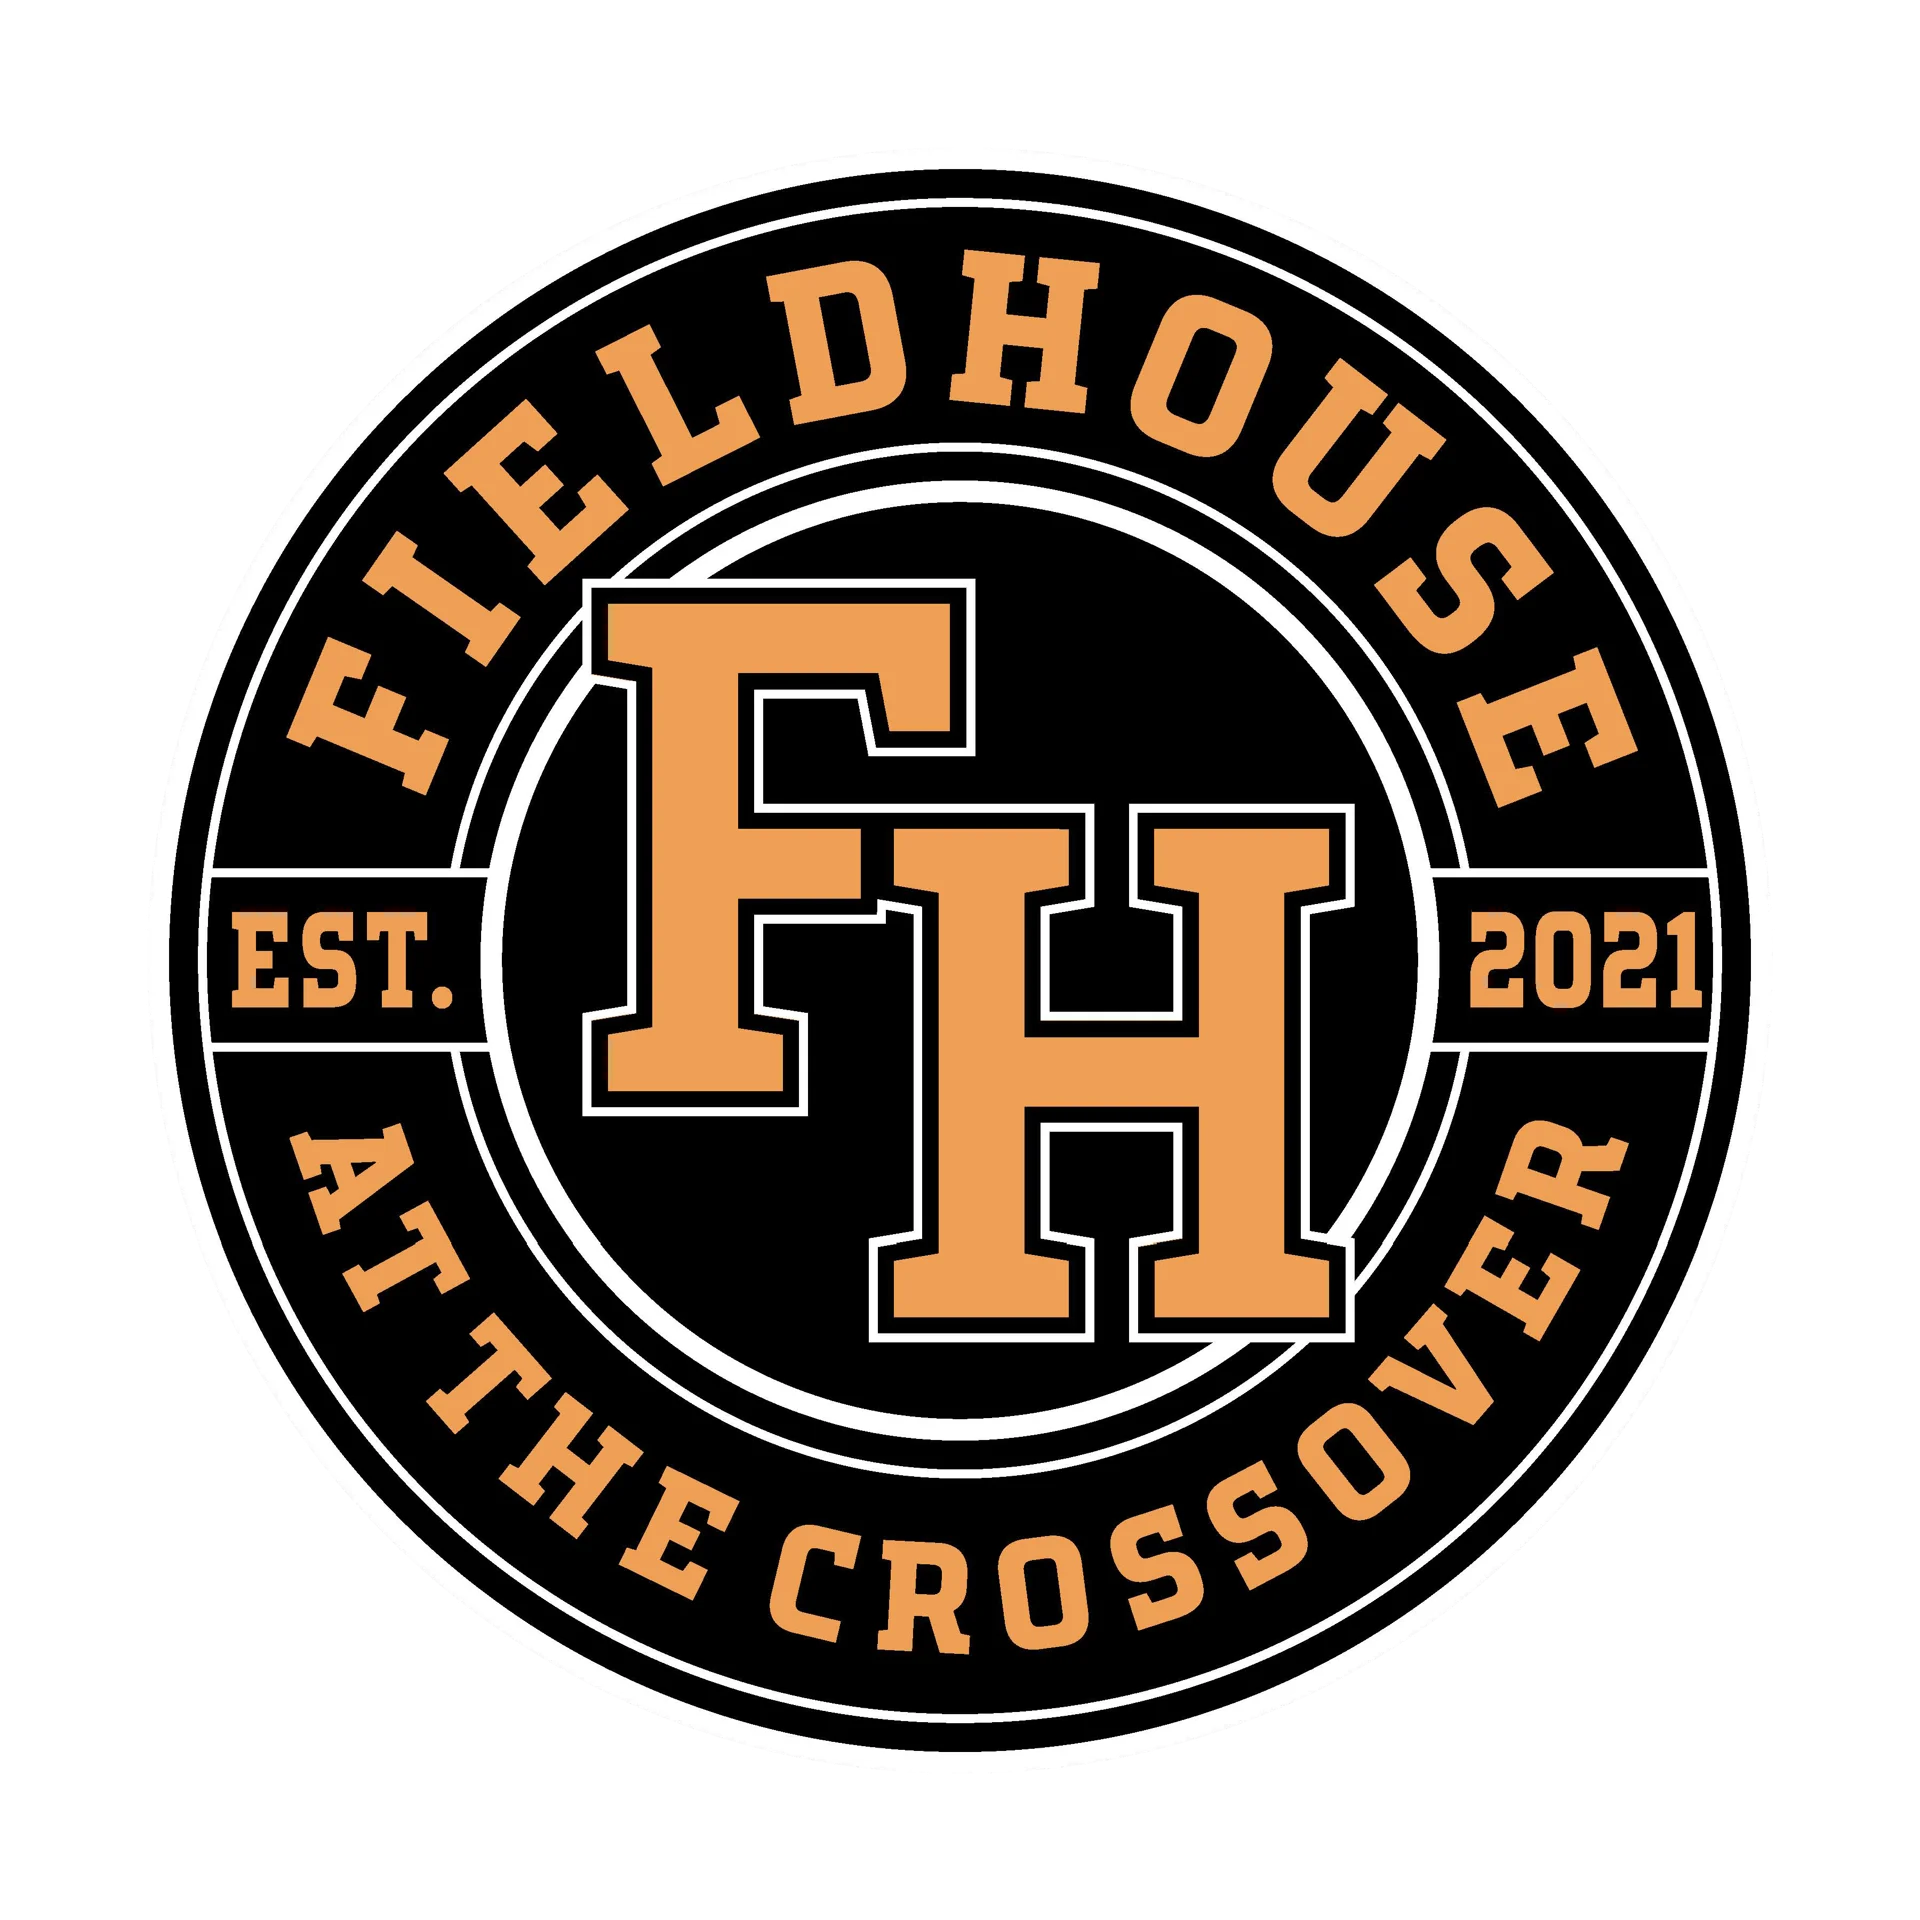 The Fieldhouse logo